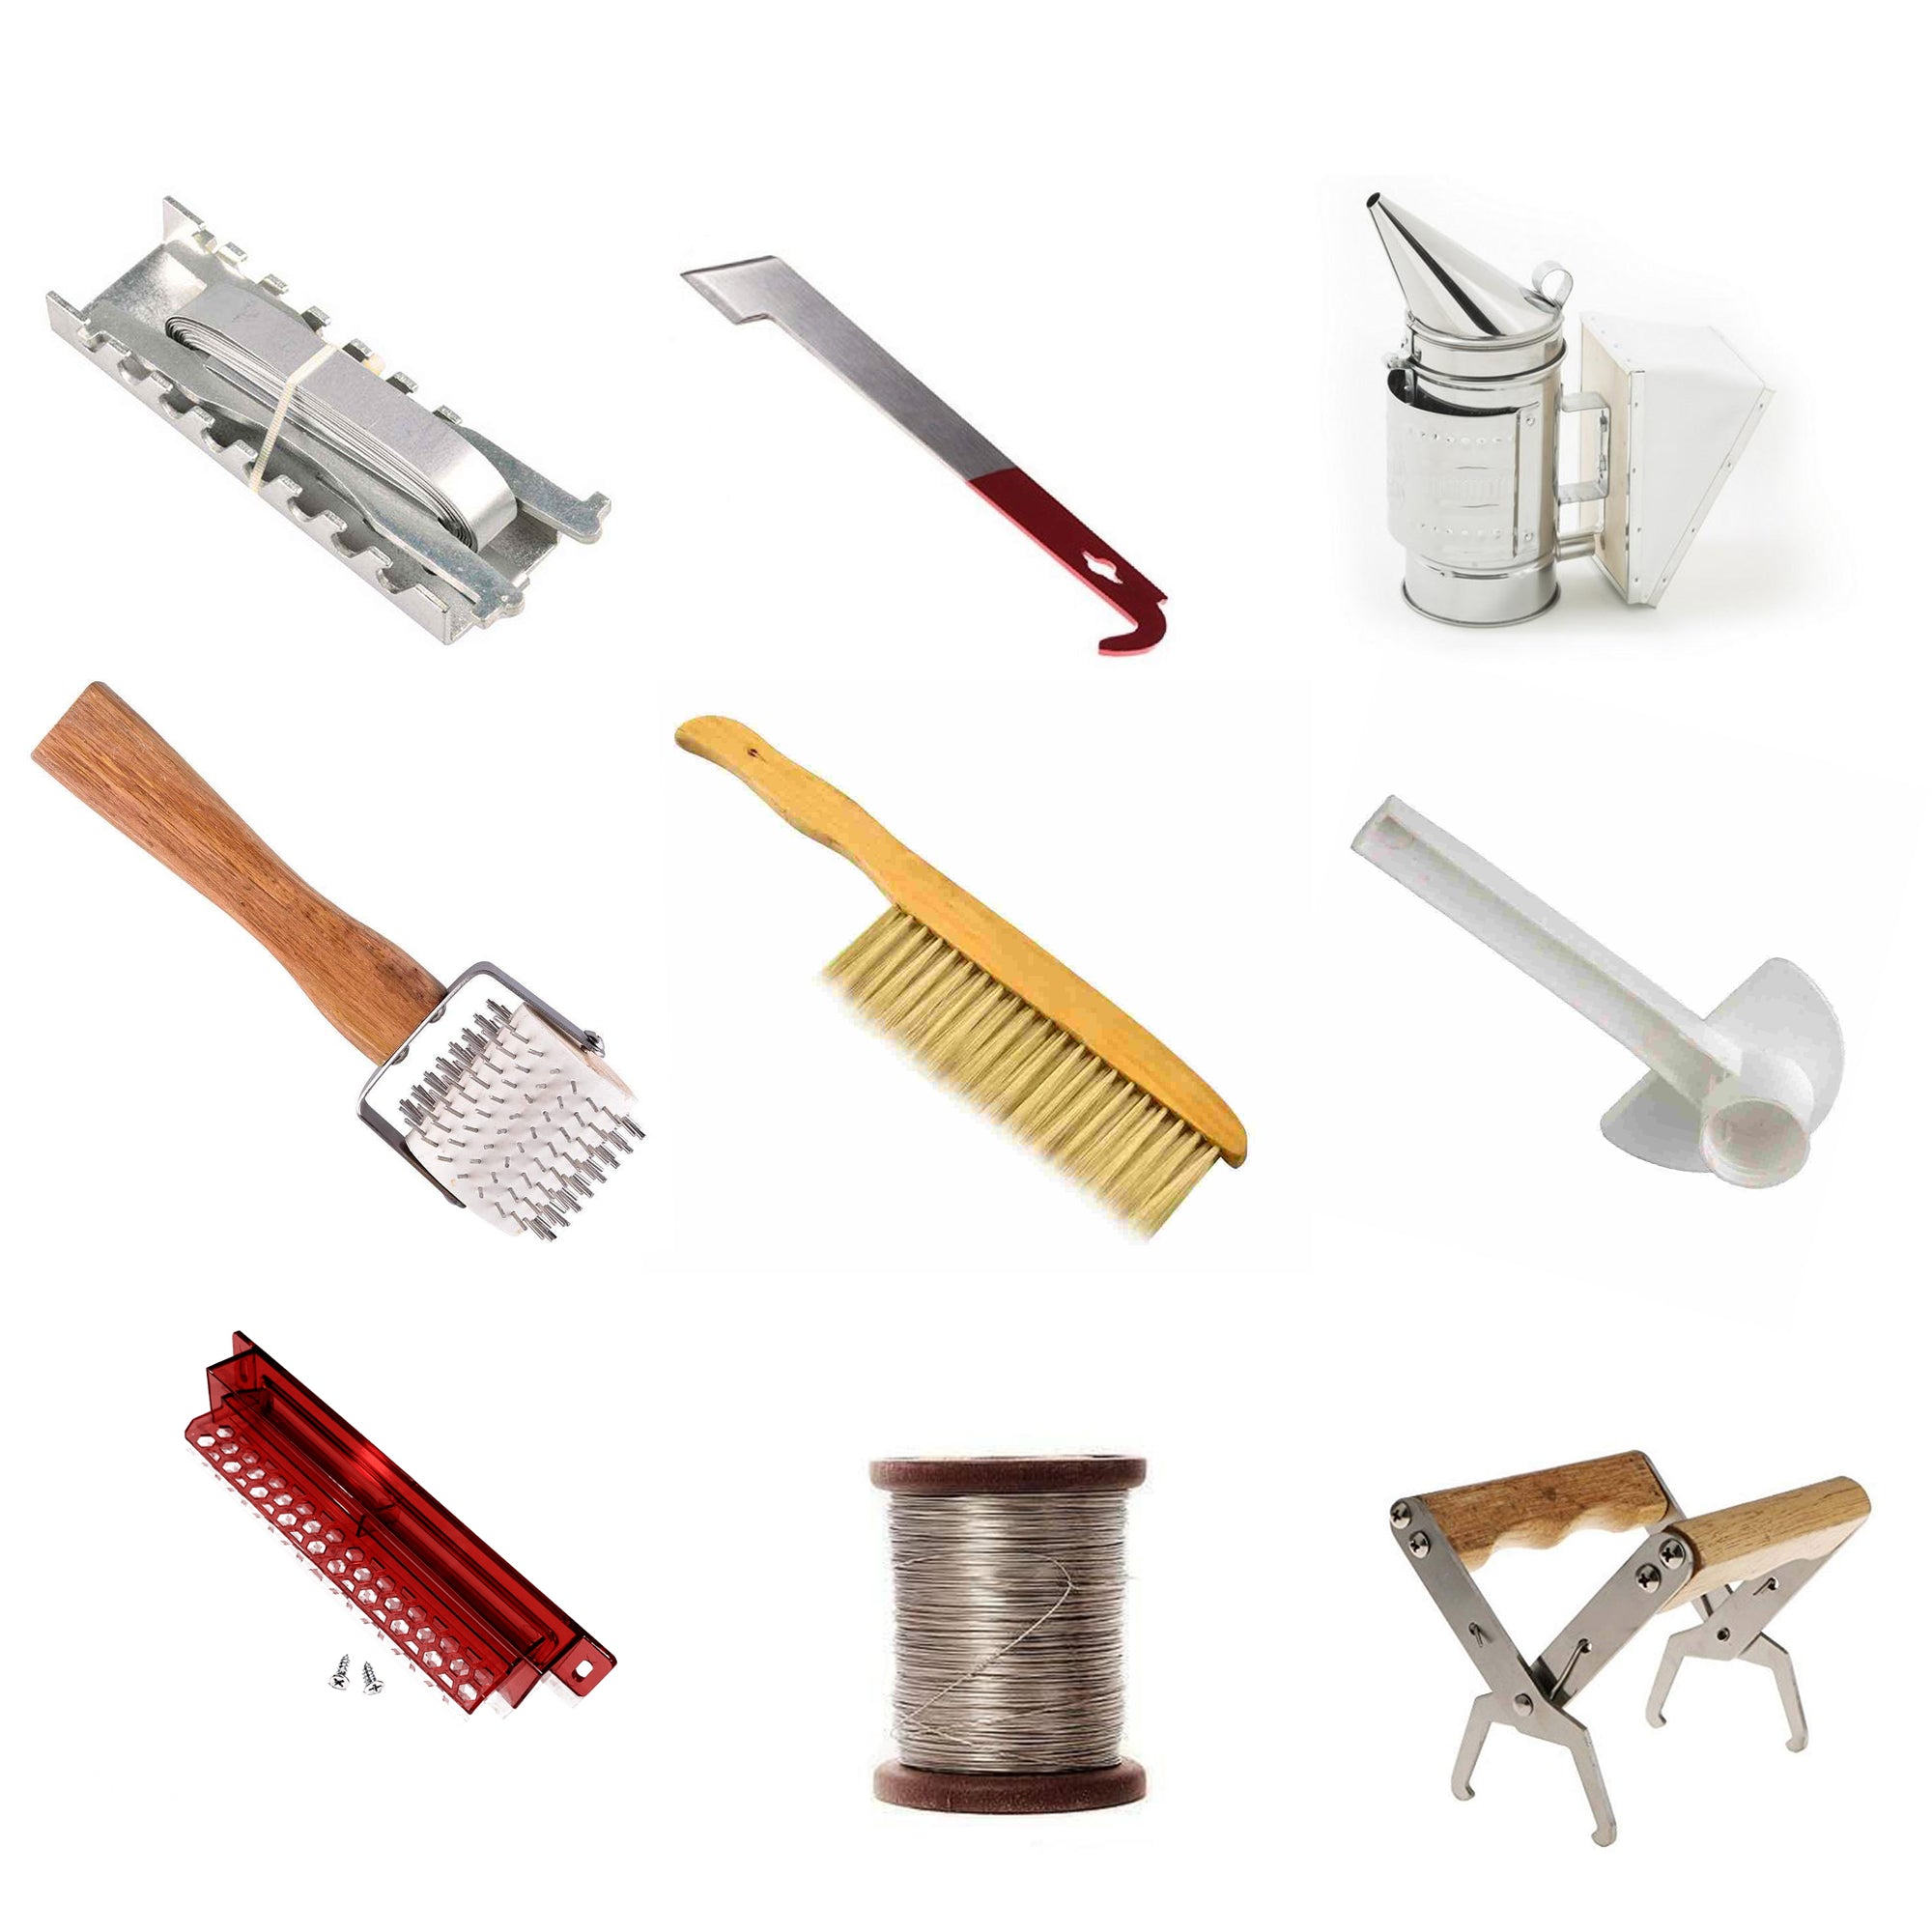 Tools & Accessories